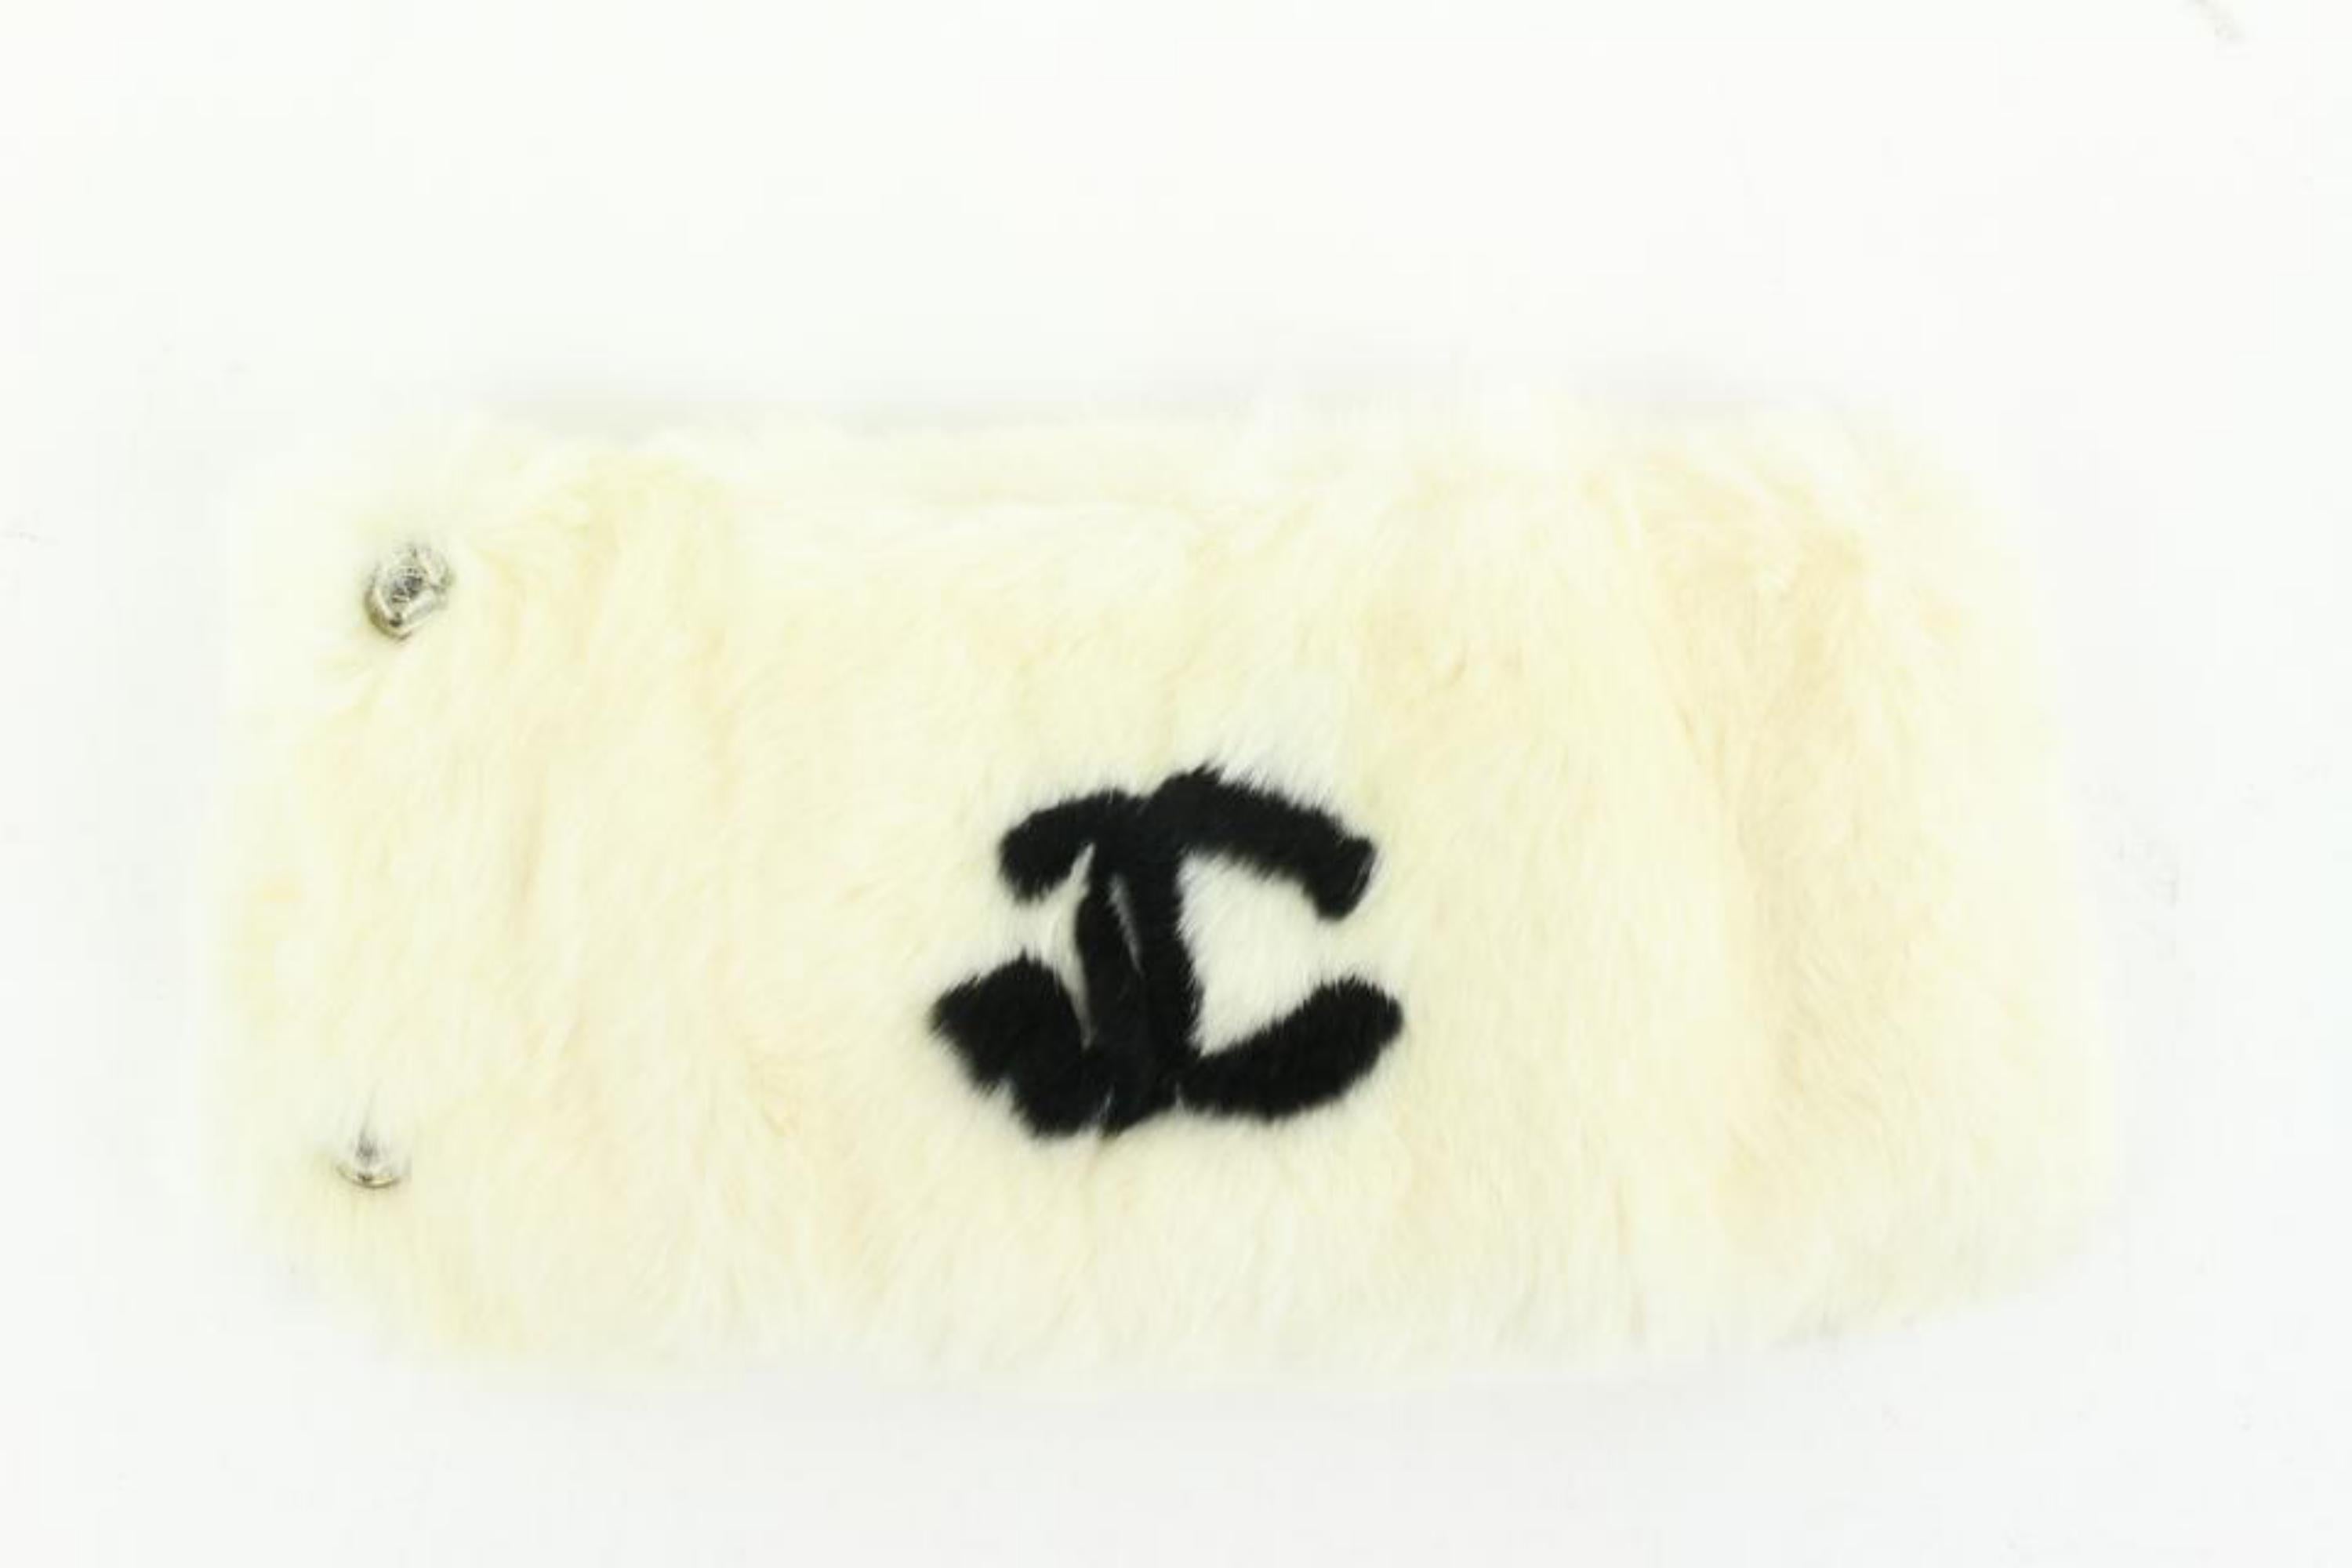 Women's Chanel White x Black CC Rabbit Fur Wrist Band Bracelet s331ck41 For Sale